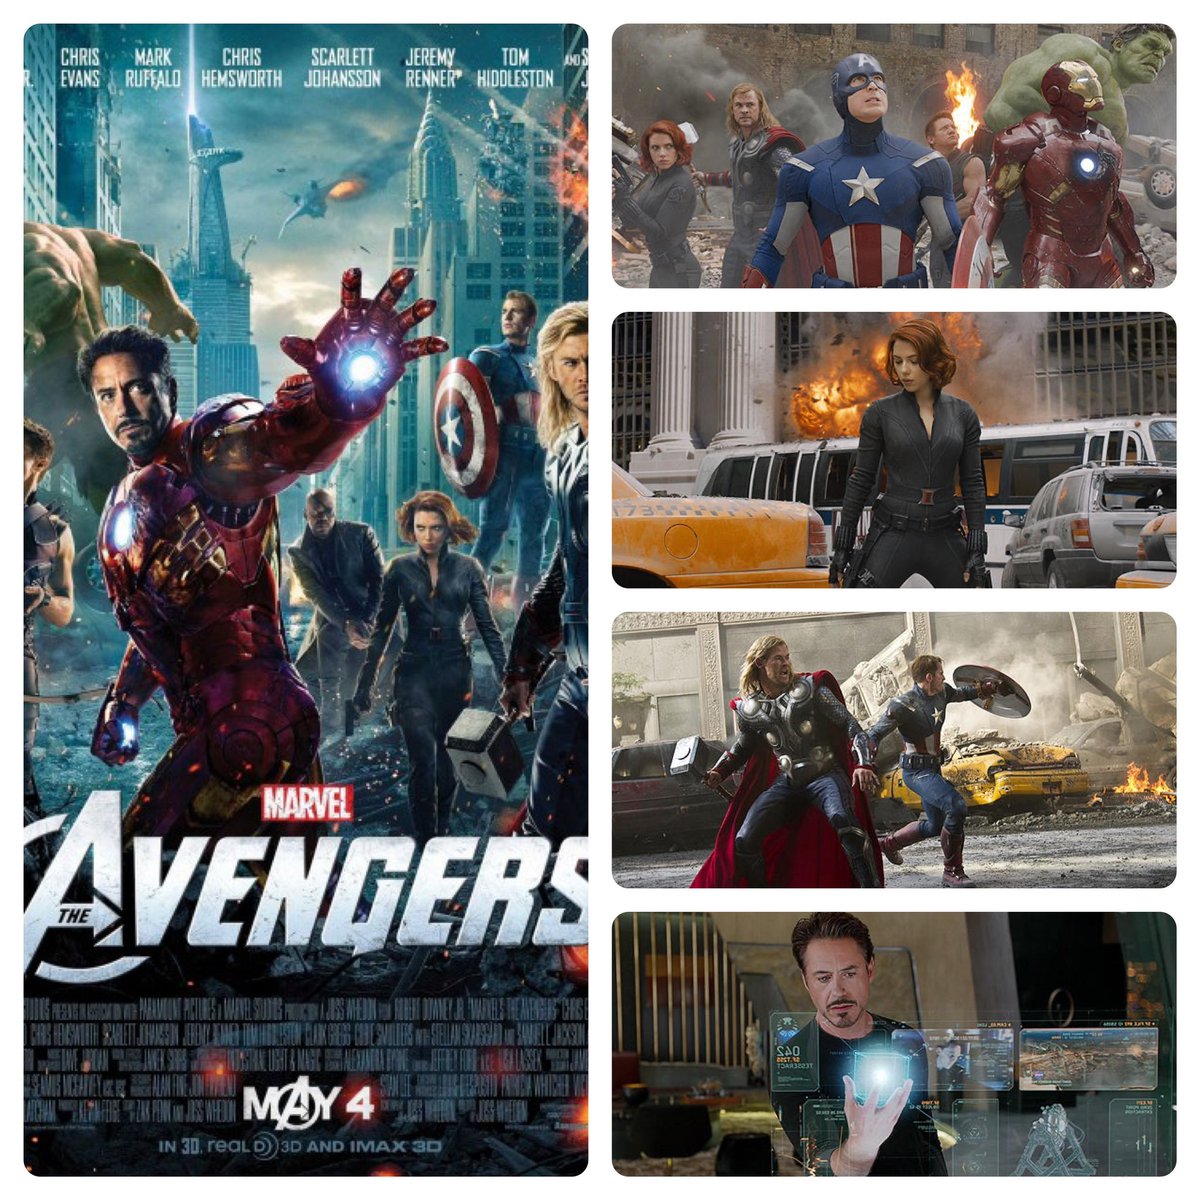 The Avengers celebrates 12nd anniversary today.
#theavengers #avengers #tonystark #ironman #steverogers #captainamerica #brucebanner #hulk #thor #natasharomanoff #blackwidow #clintbarton #hawkeye #loki #nickfury #avengersmovie #avengersfan #marvelcinematicuniverse #marvel